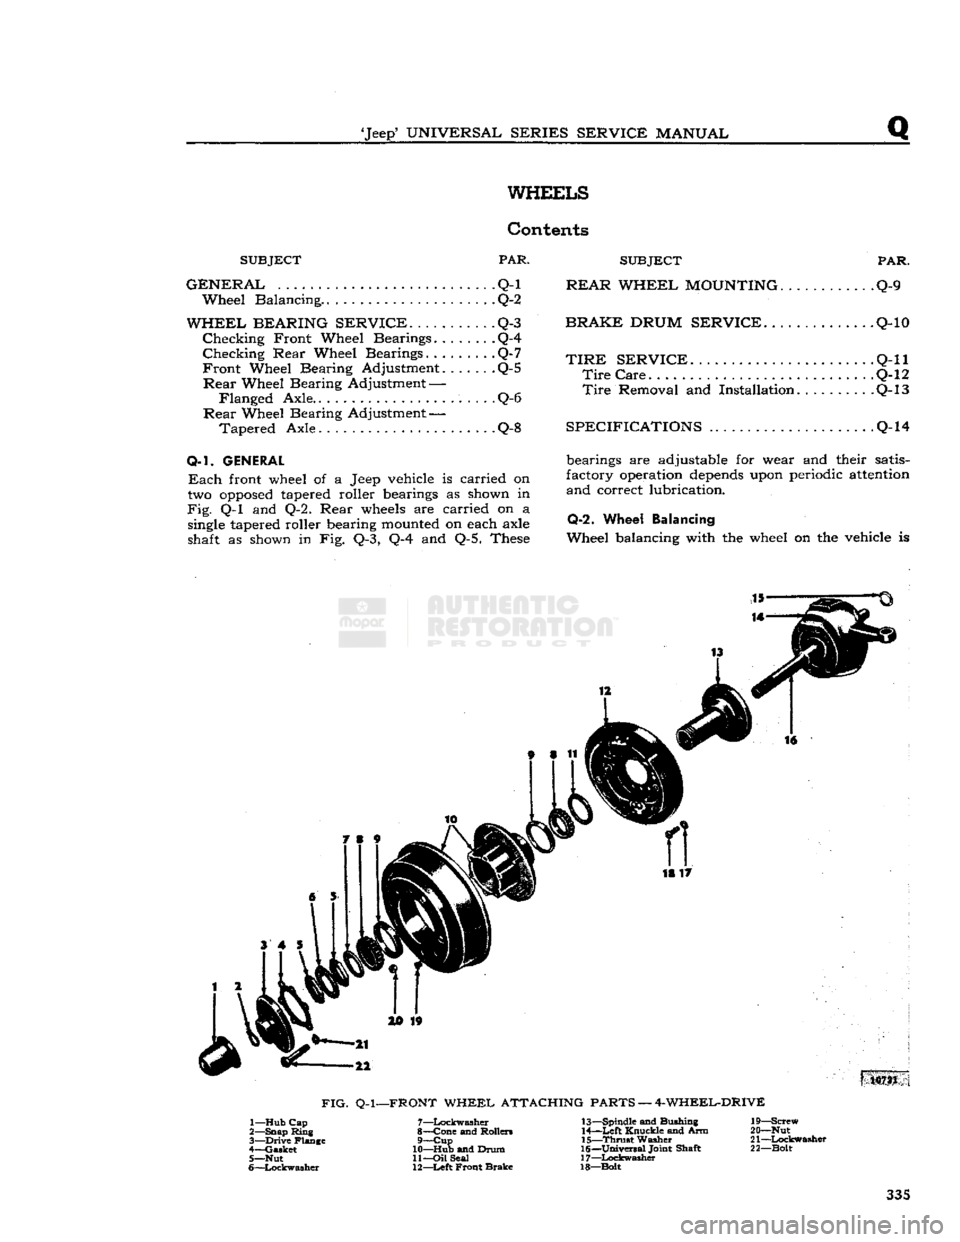 JEEP CJ 1953  Service Manual 
Jeep
 UNIVERSAL
 SERIES SERVICE
 MANUAL 

WHEELS 

Contents 

SUBJECT PAR. 

GENERAL
 Q-l  Wheel Balancing. Q-2 

WHEEL BEARING SERVICE.
 ......
 Q-3 
 Checking
 Front Wheel Bearings Q-4 

Checking